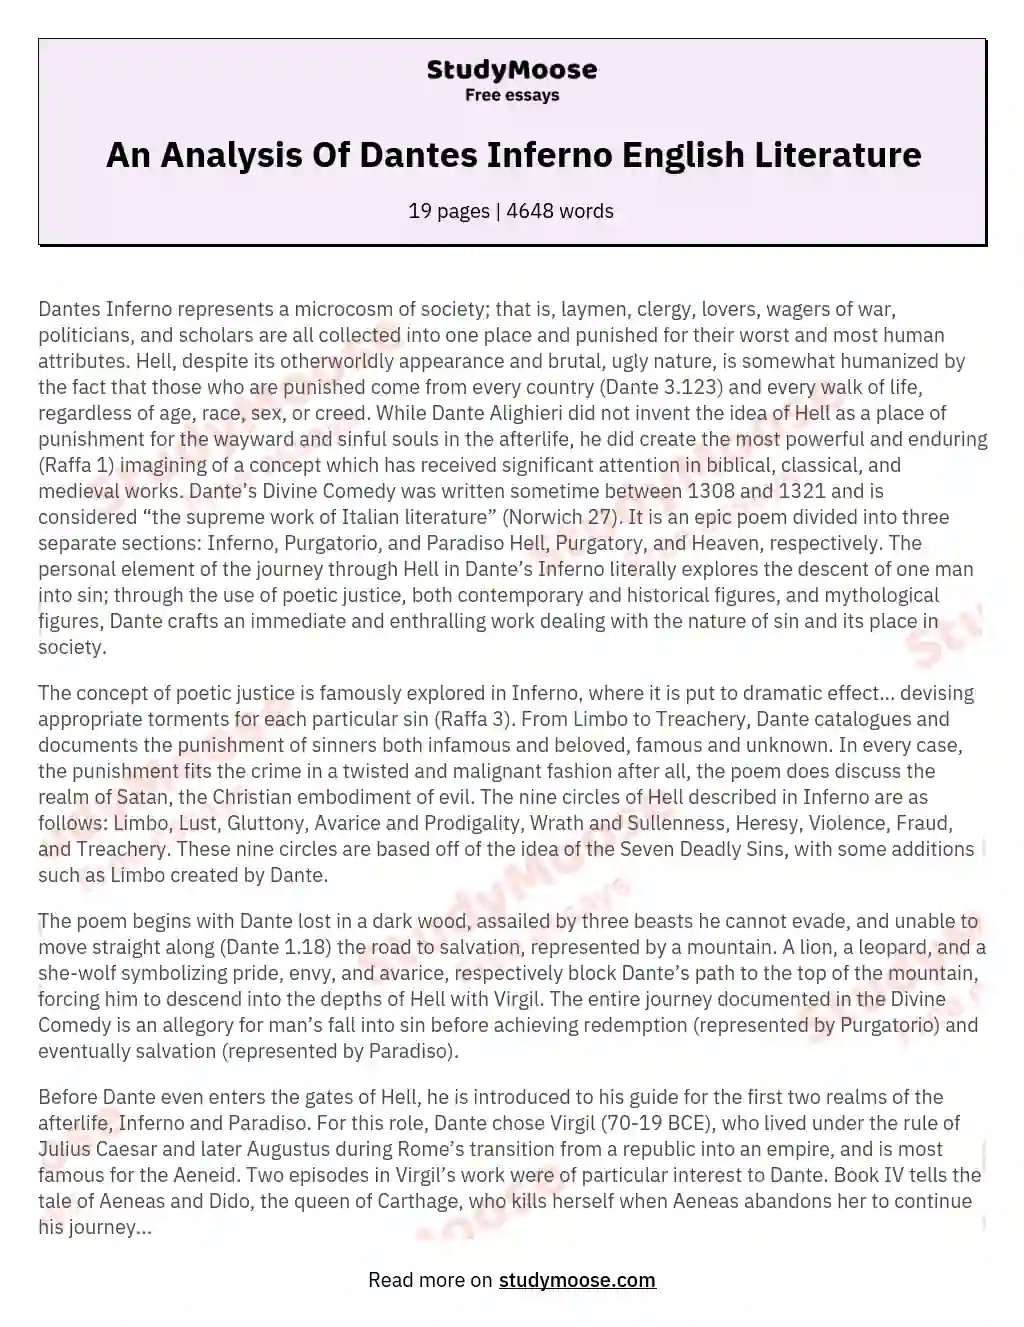 An Analysis Of Dantes Inferno English Literature essay